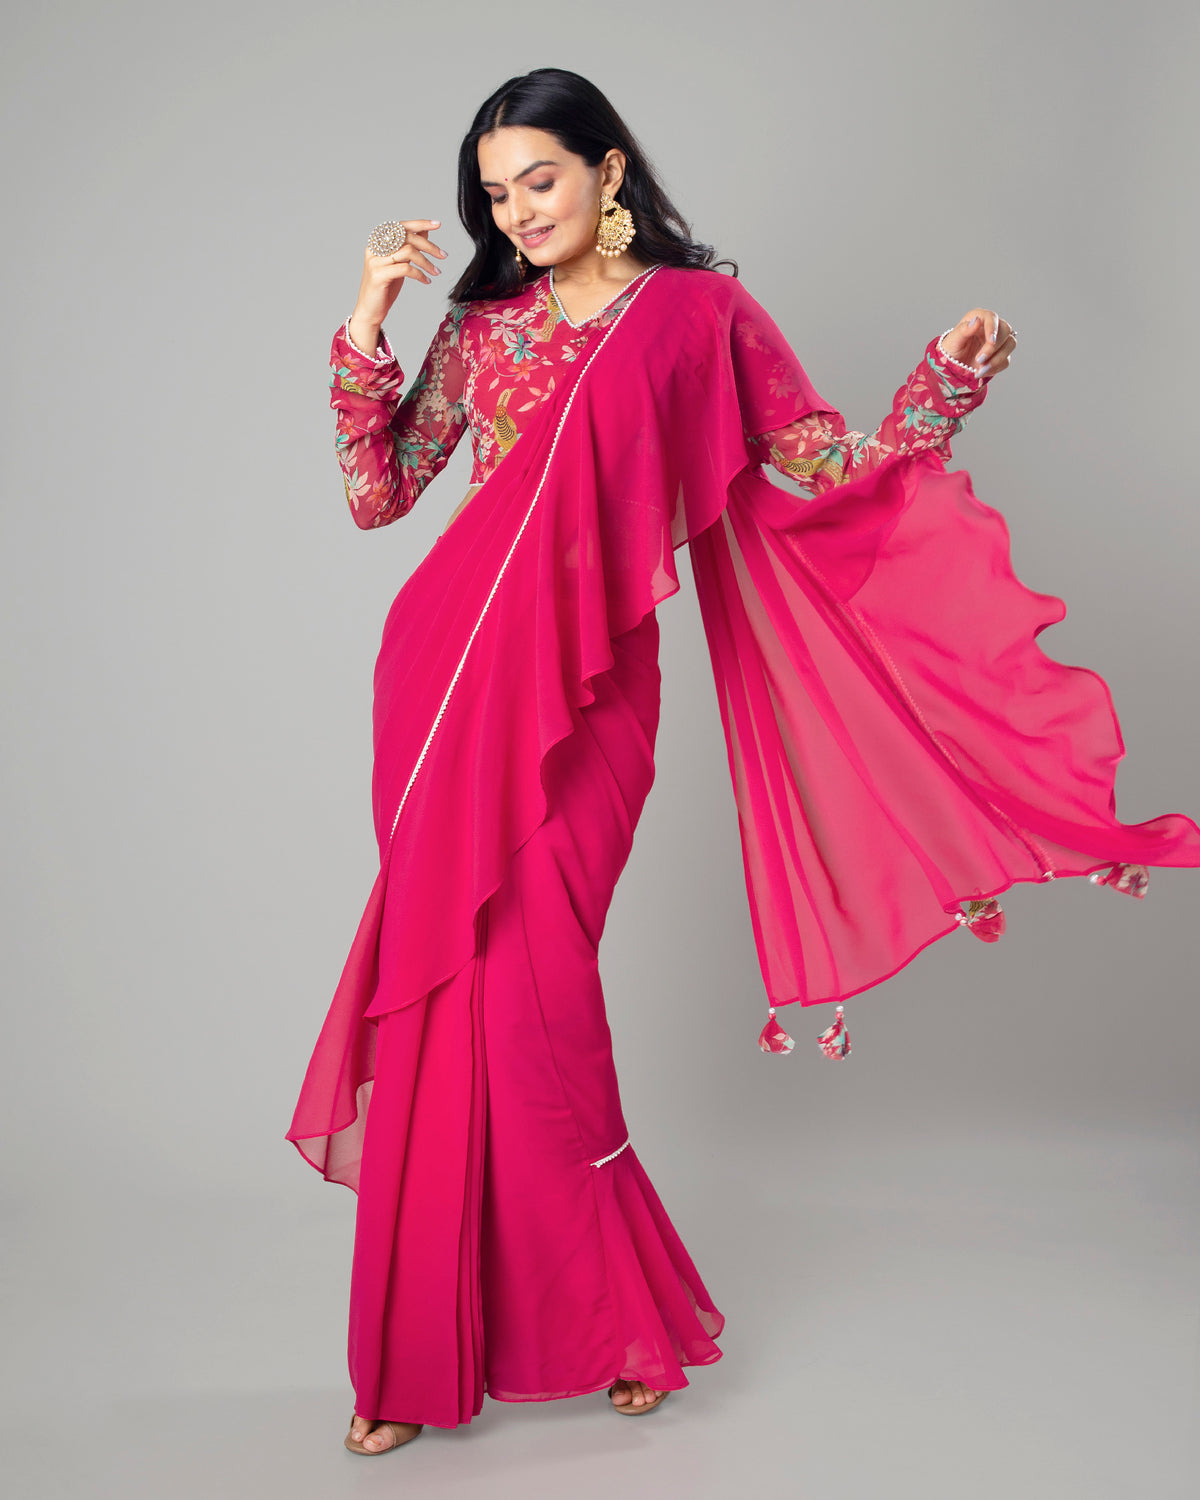 Classic Hot Pink Ruffled Designer Pre-Draped Saree